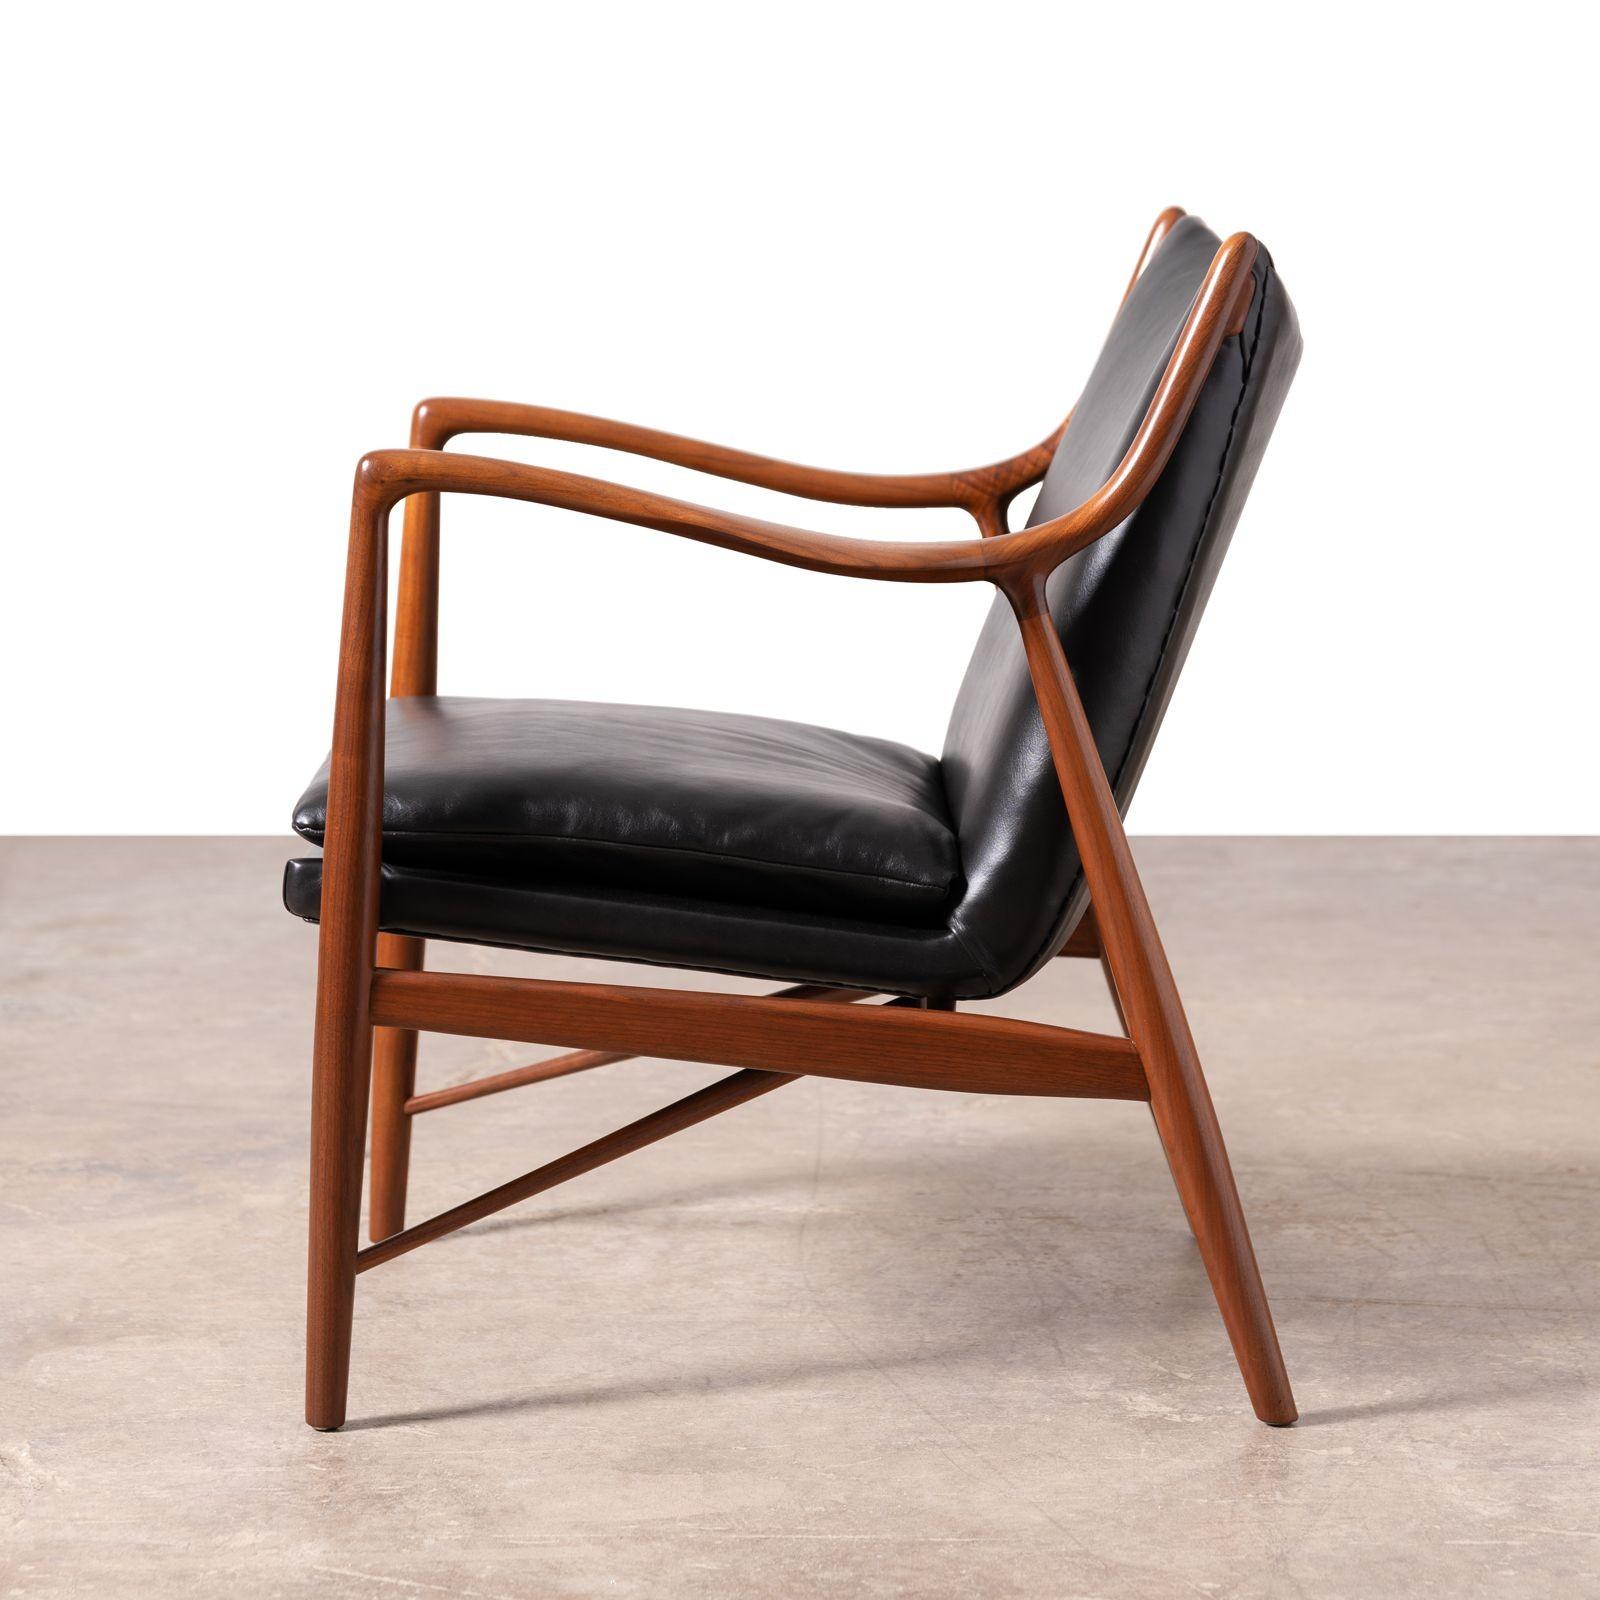 Finn Juhl NV-45 Scandinavian Lounge Chairs in Walnut and Black Leather 1950s For Sale 1